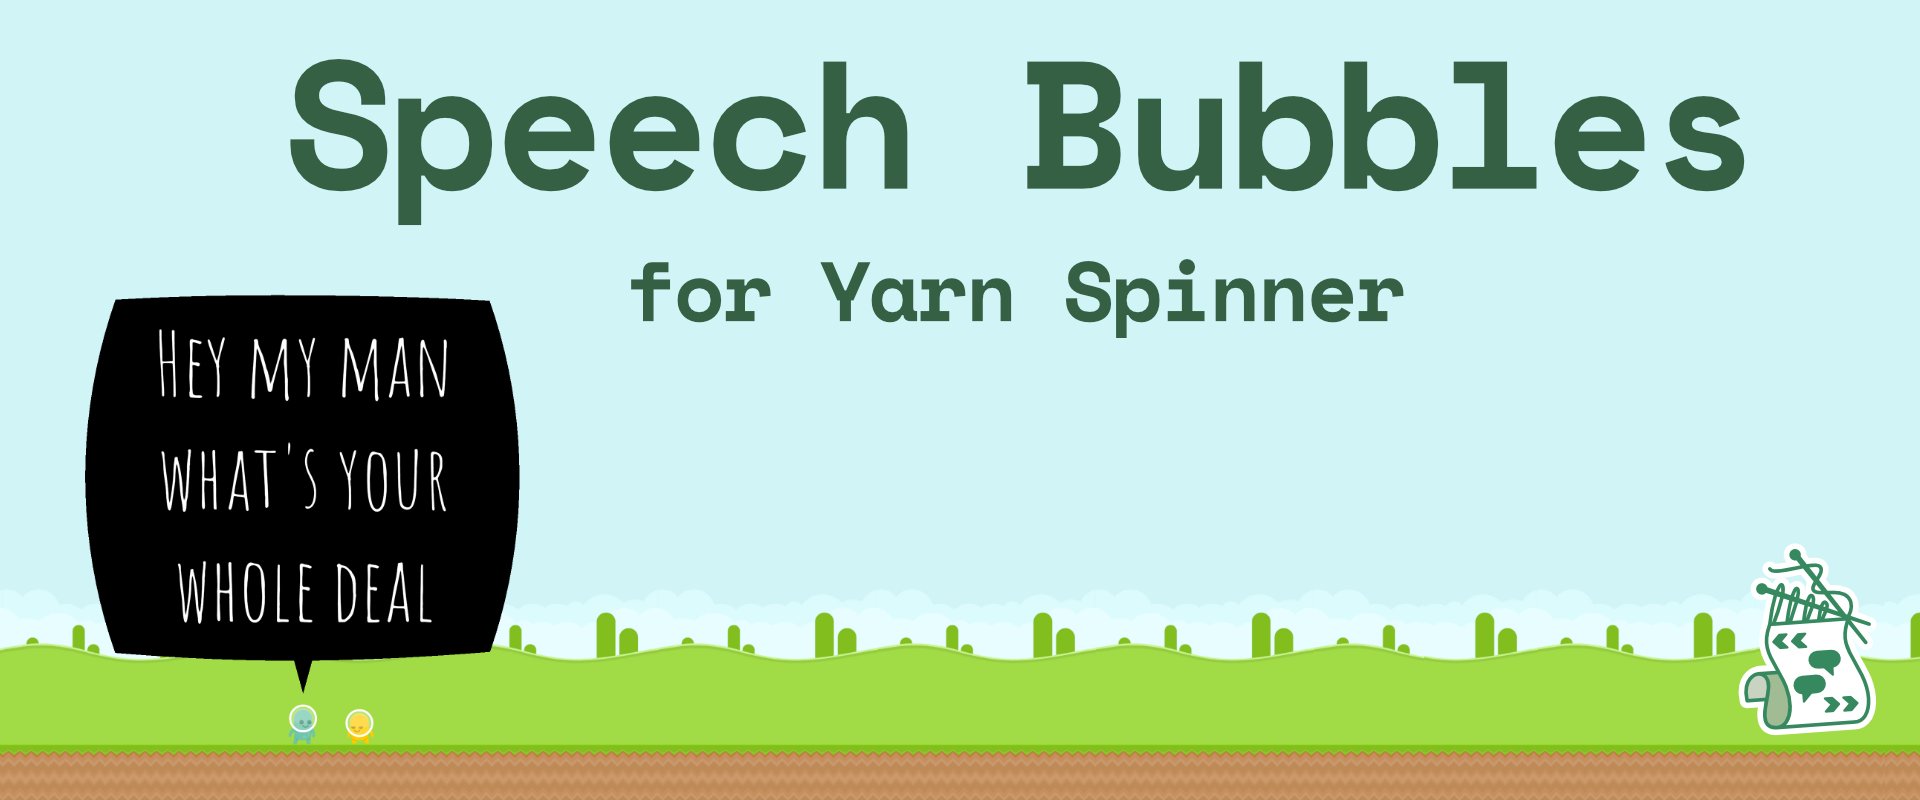 Speech Bubbles for Yarn Spinner